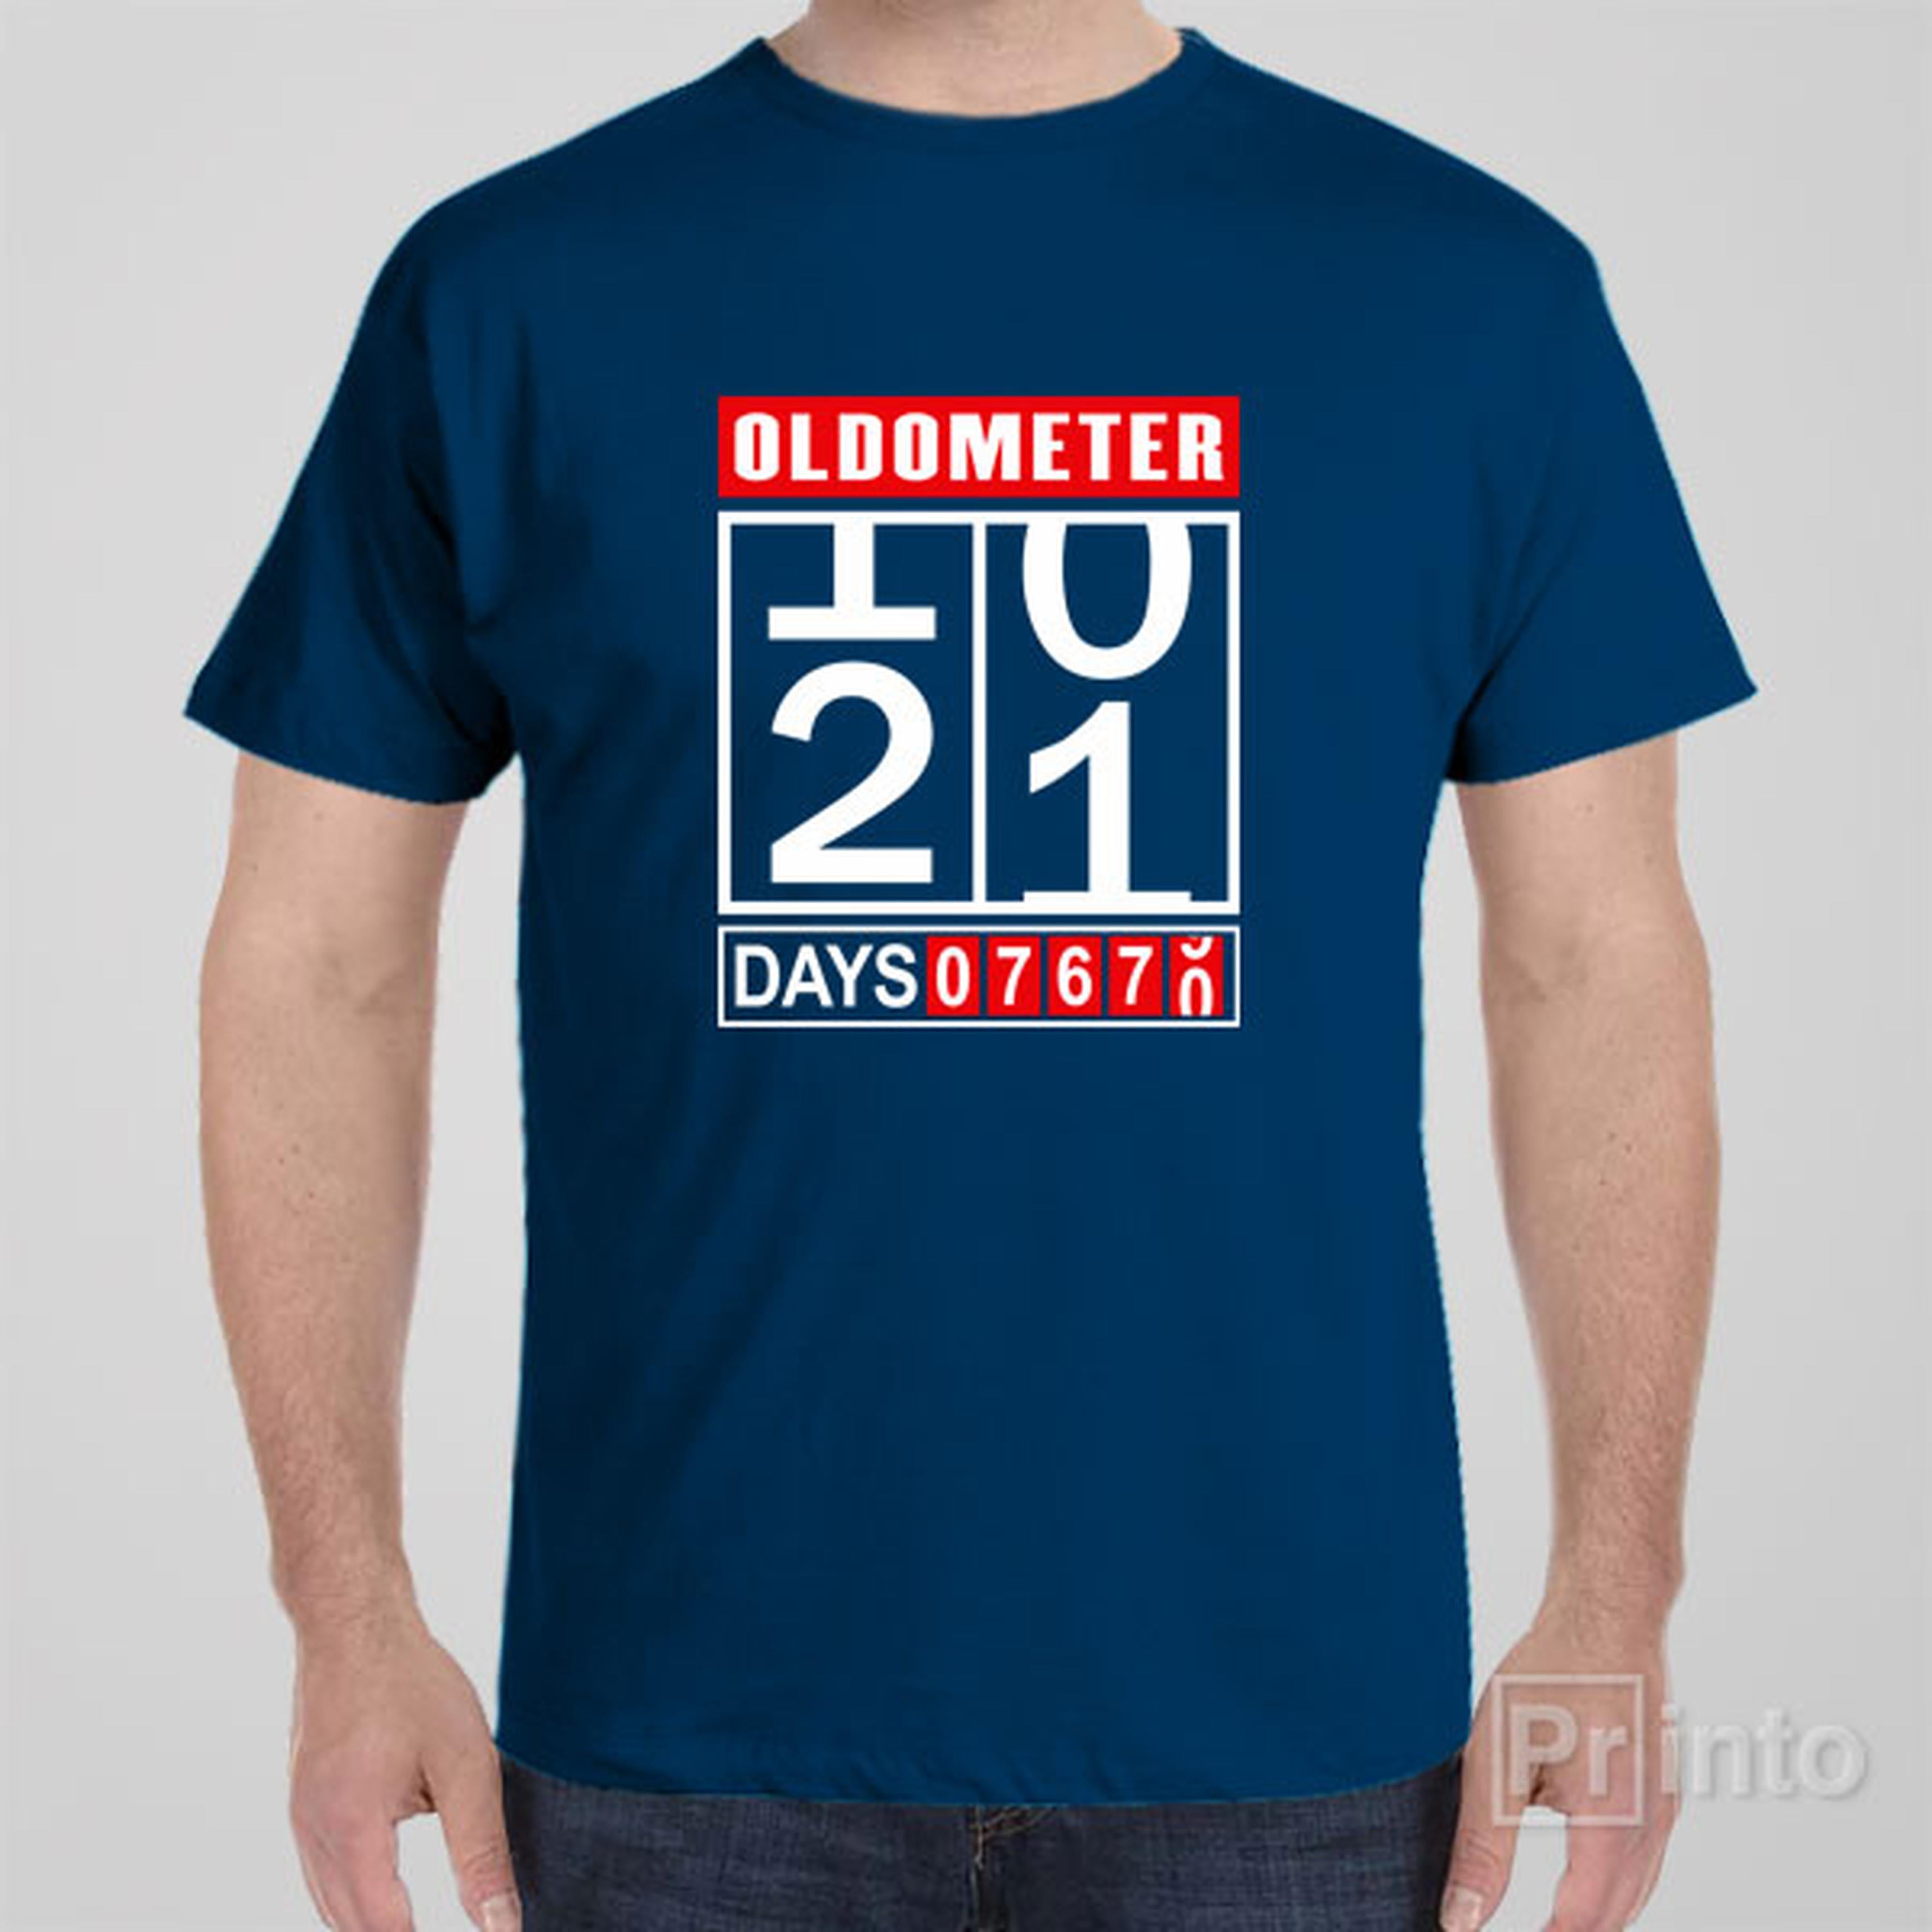 oldometer-21st-birthday-t-shirt